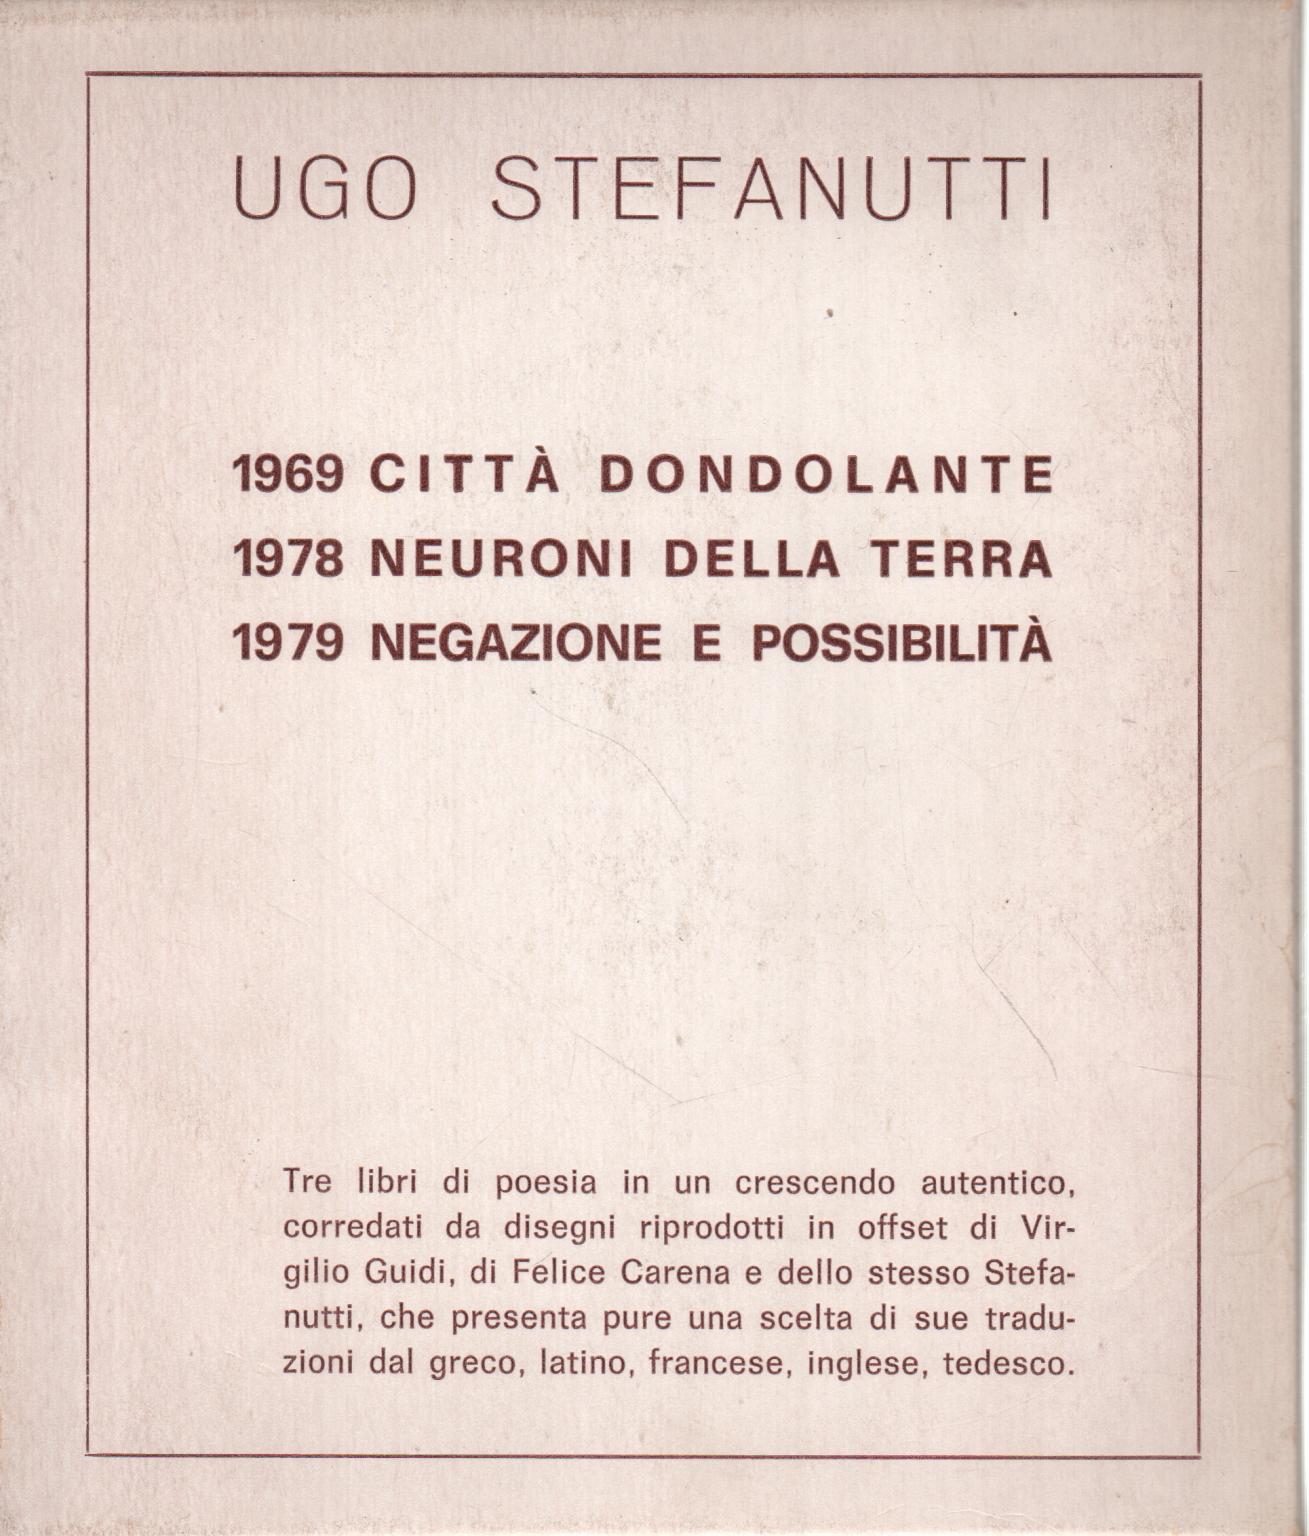 The city dangling - Neurons of the earth - Denial, Ugo Stefanutti